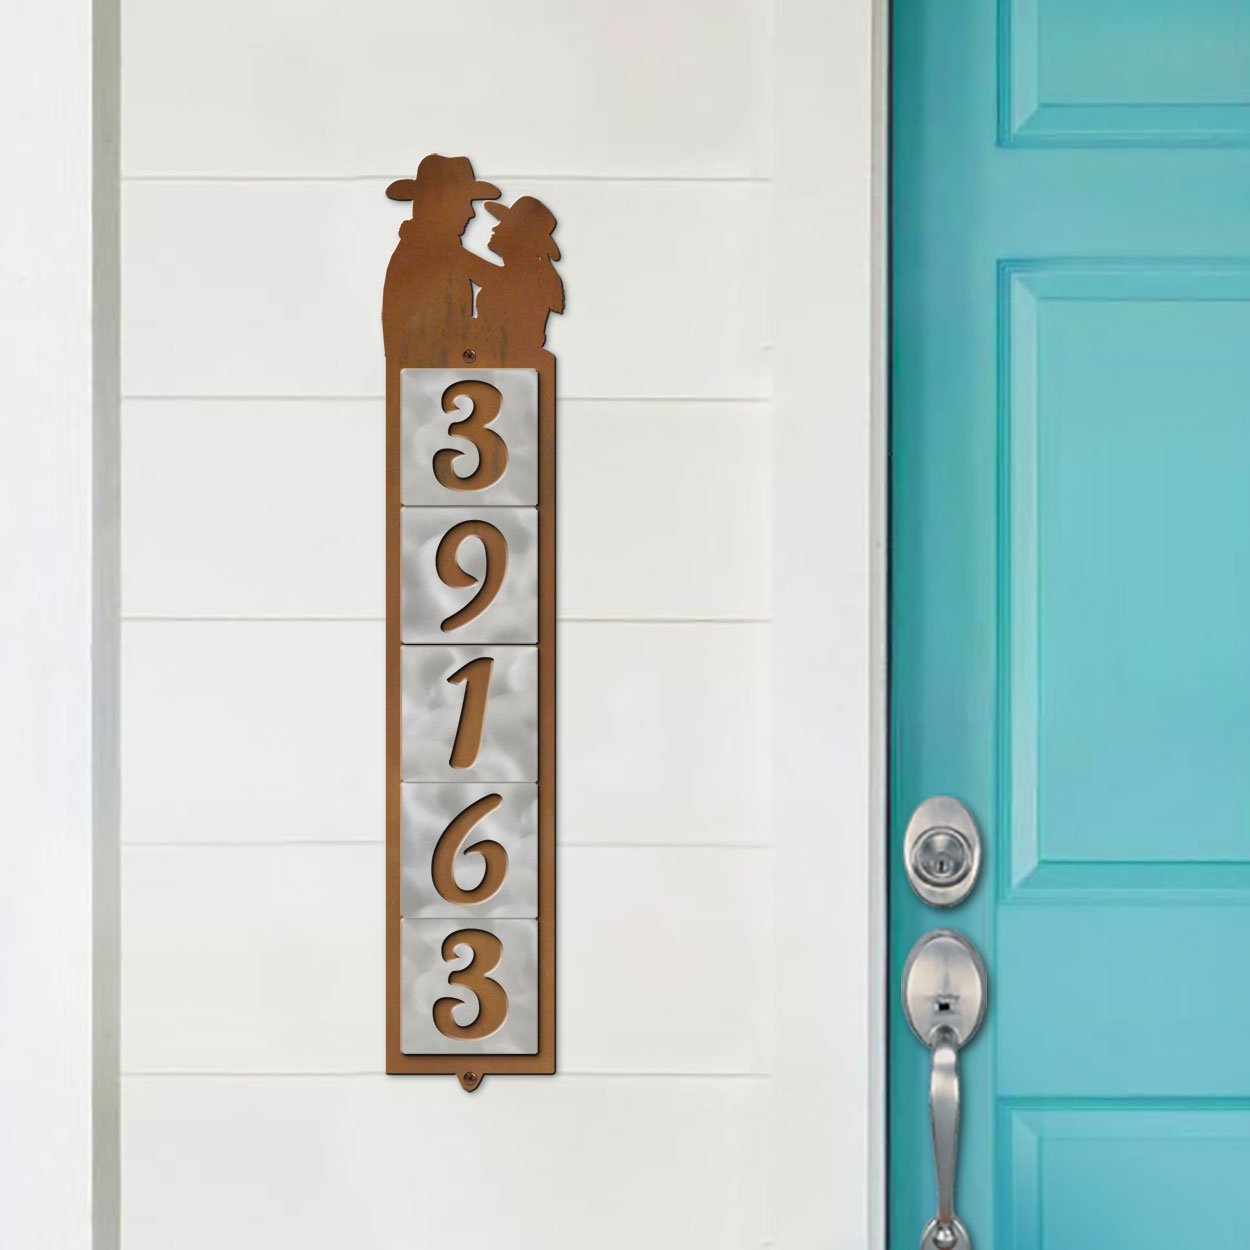 605085 - Cowboy Couple Design 5-Digit Vertical Tile House Numbers